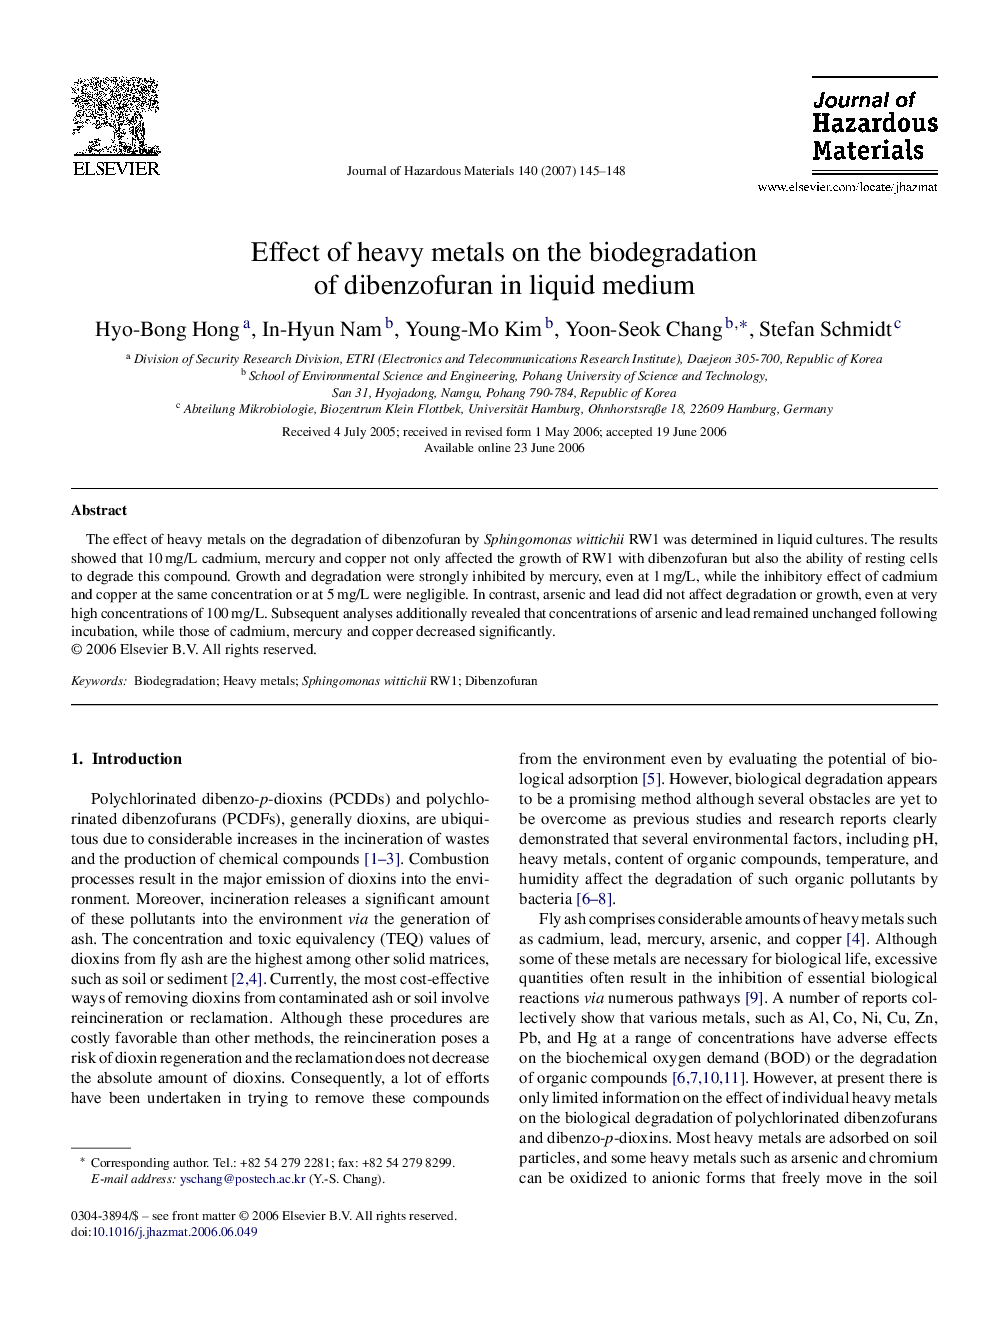 Effect of heavy metals on the biodegradation of dibenzofuran in liquid medium